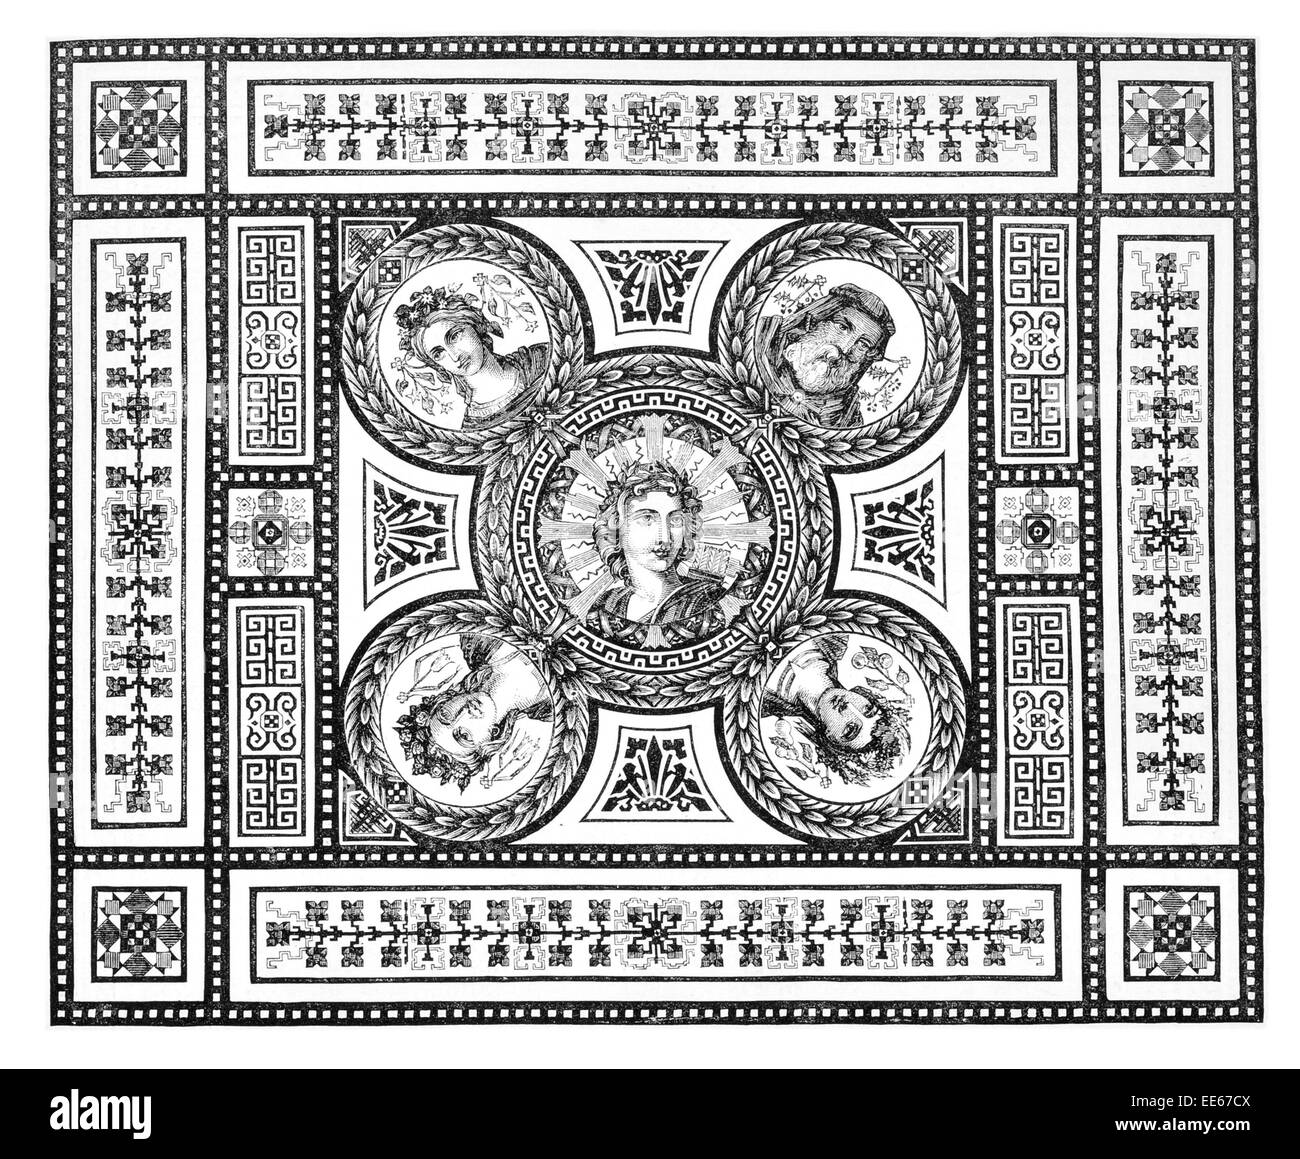 Pittorica pavimentazione a mosaico signori Maw & Co Benthall opere Broseley Shropshire tessera piastrelle Piastrelle pavimento piastrellato in greco romana mosaici Foto Stock